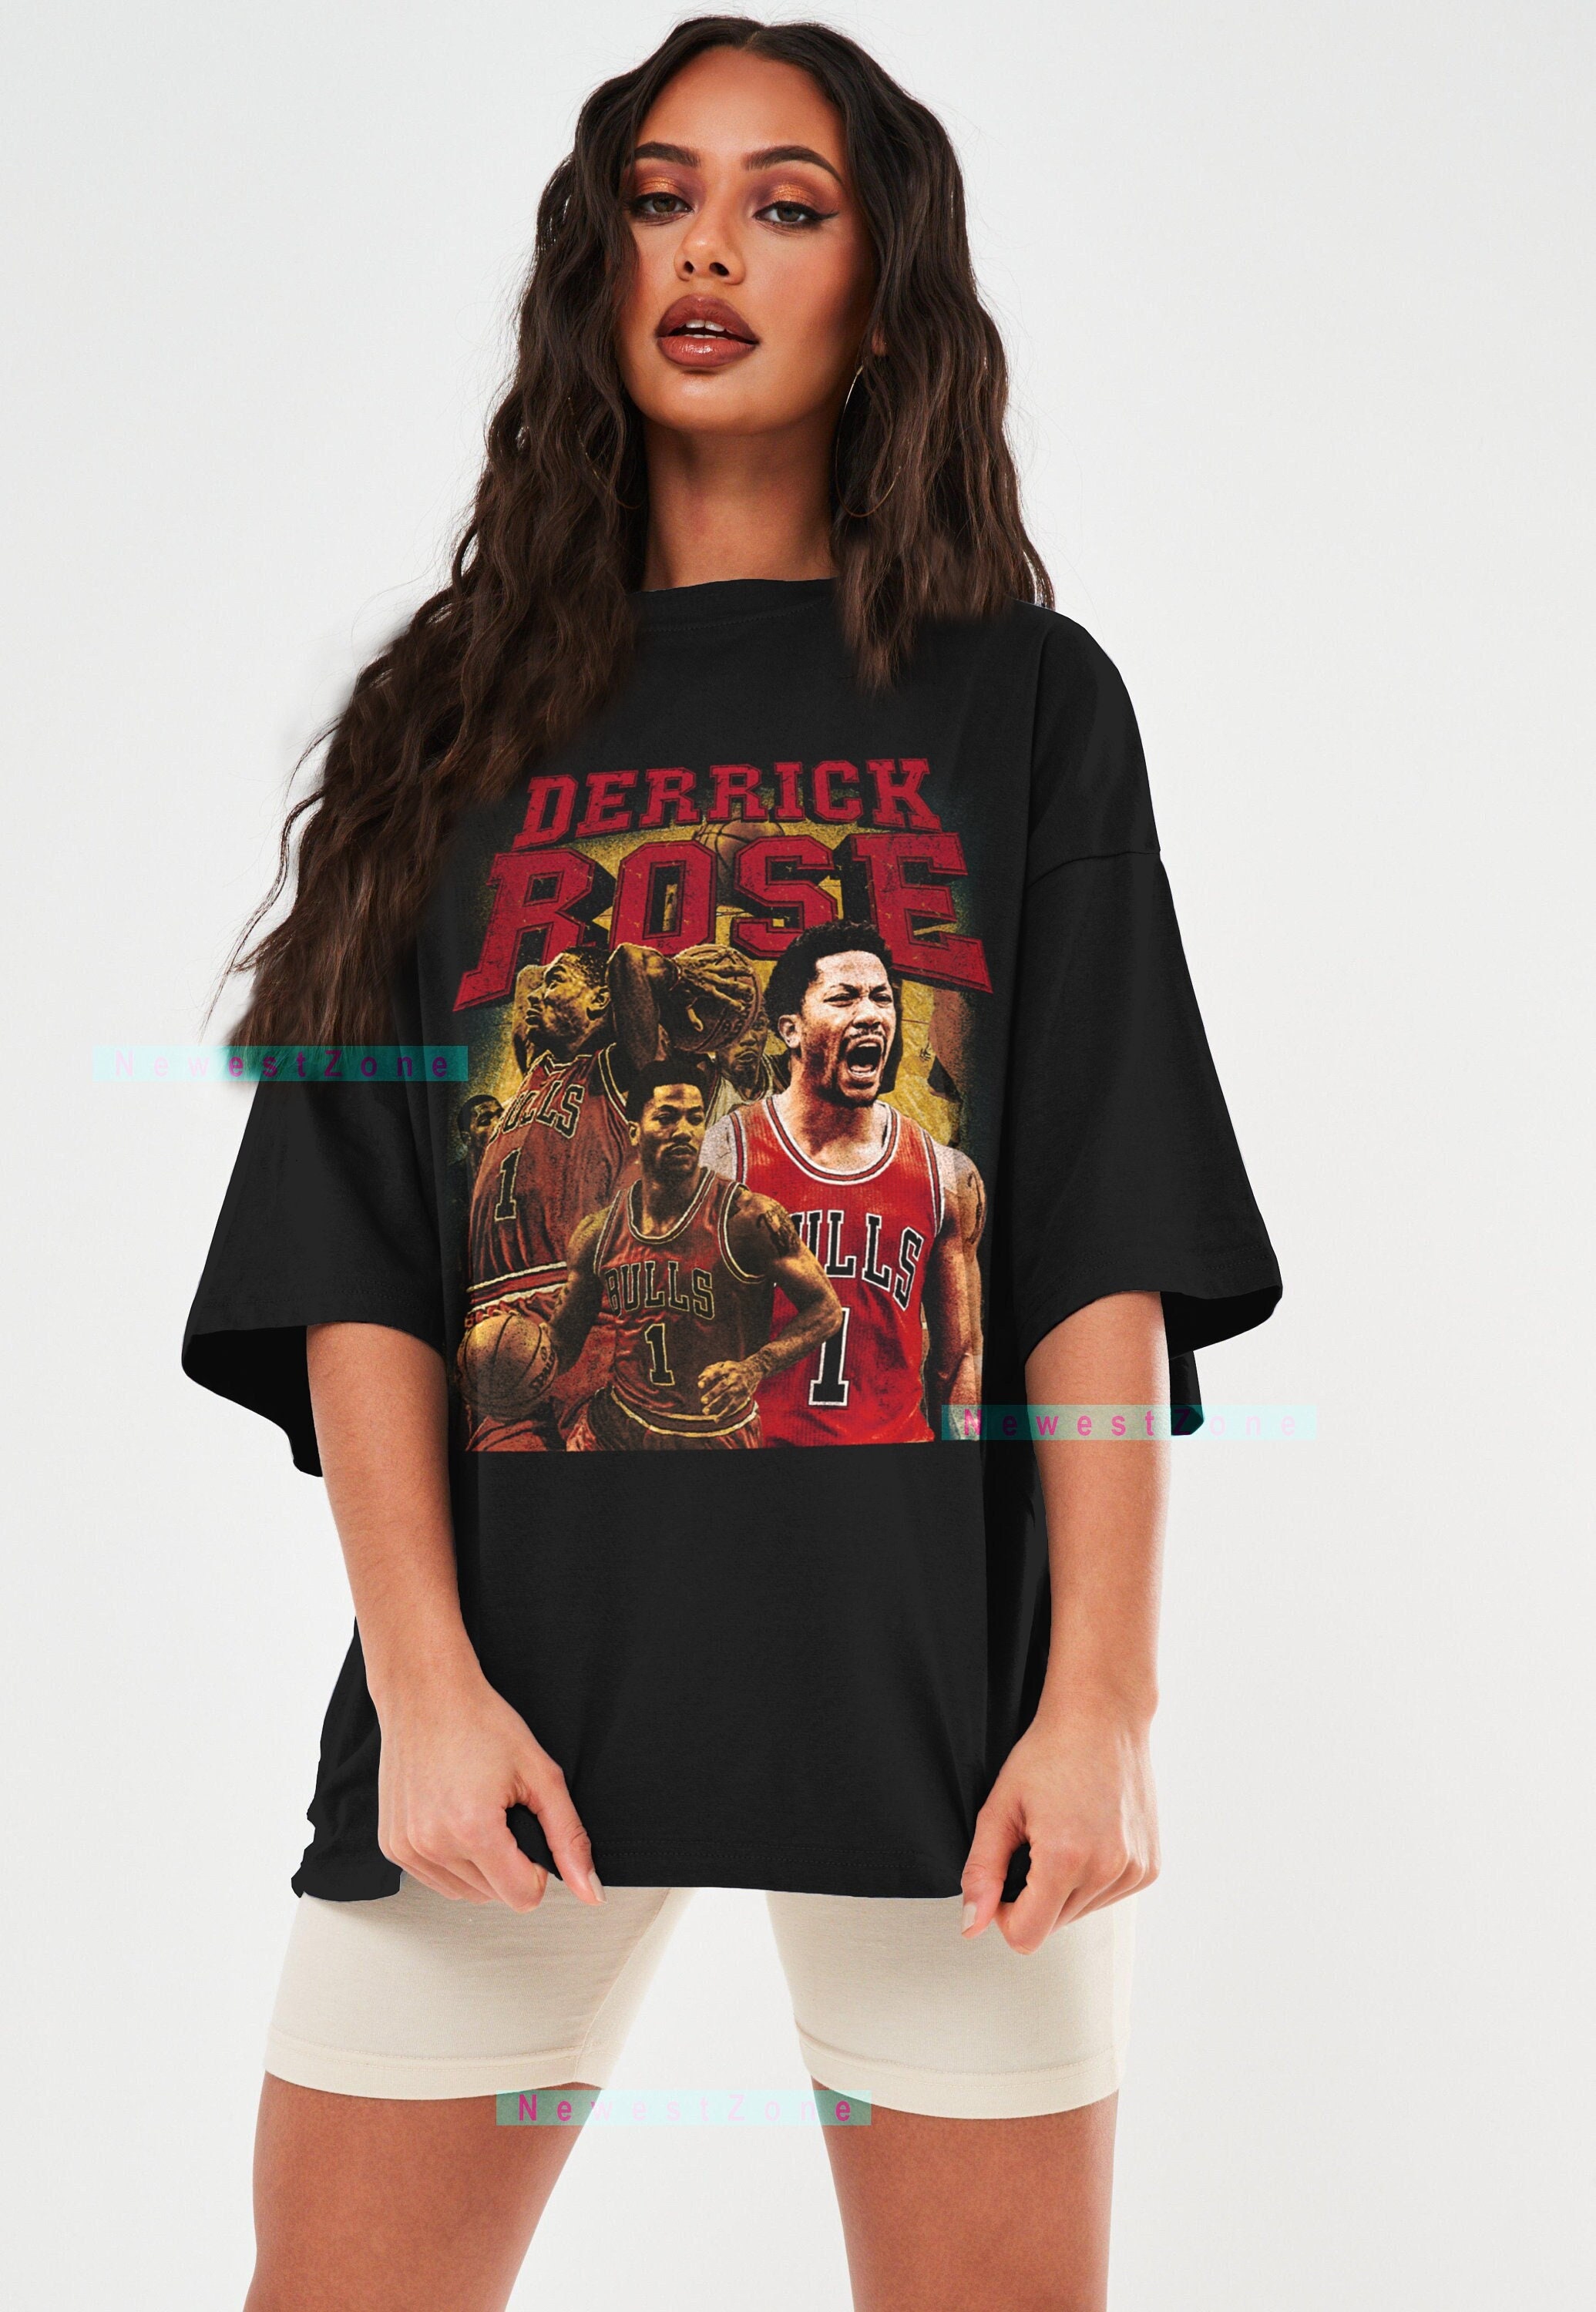 Derrick Rose All-Star Game NBA Fan Apparel & Souvenirs for sale